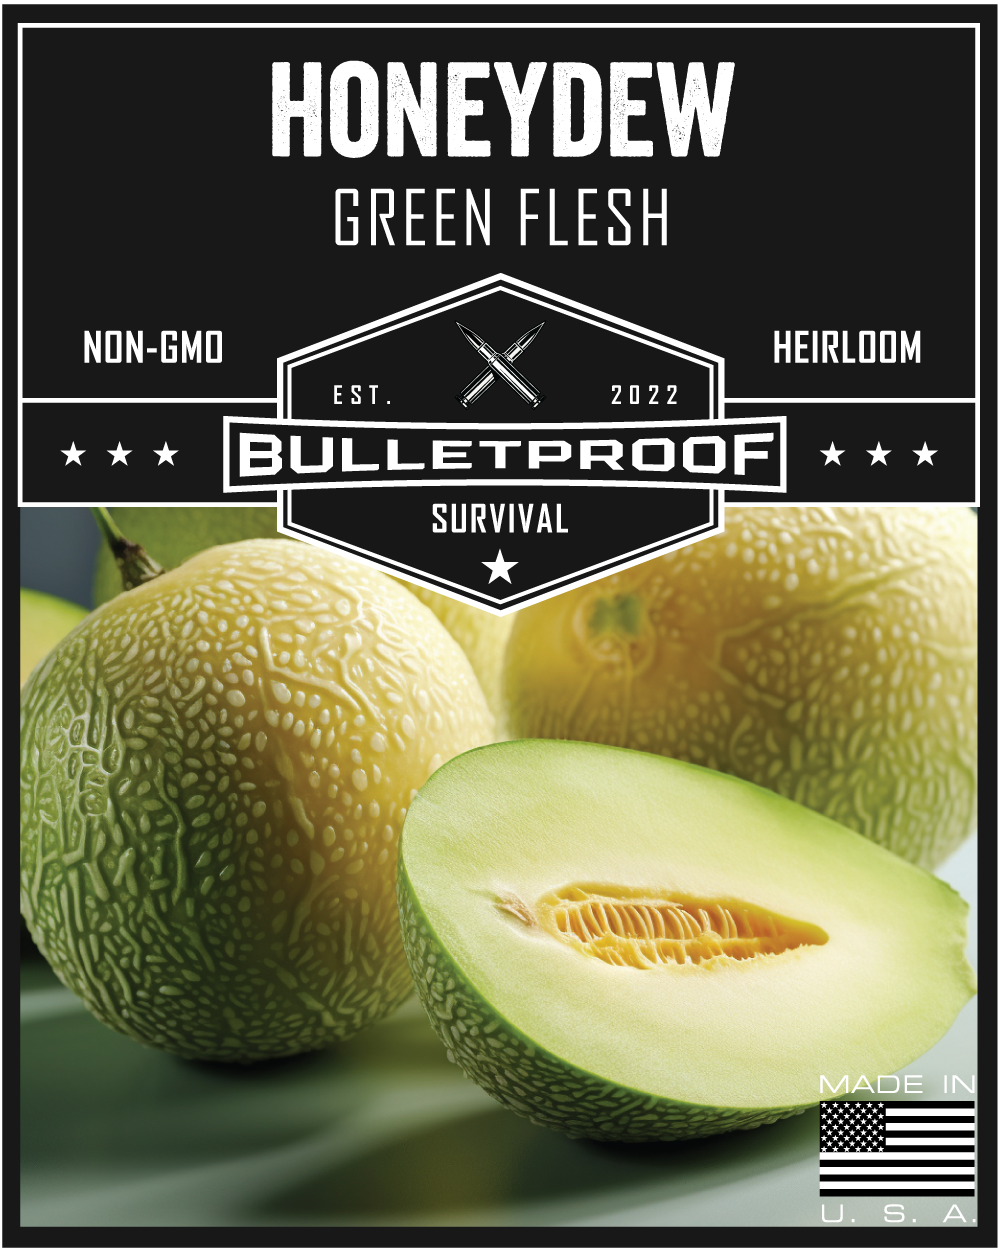 Honeydew Melon - Green Flesh